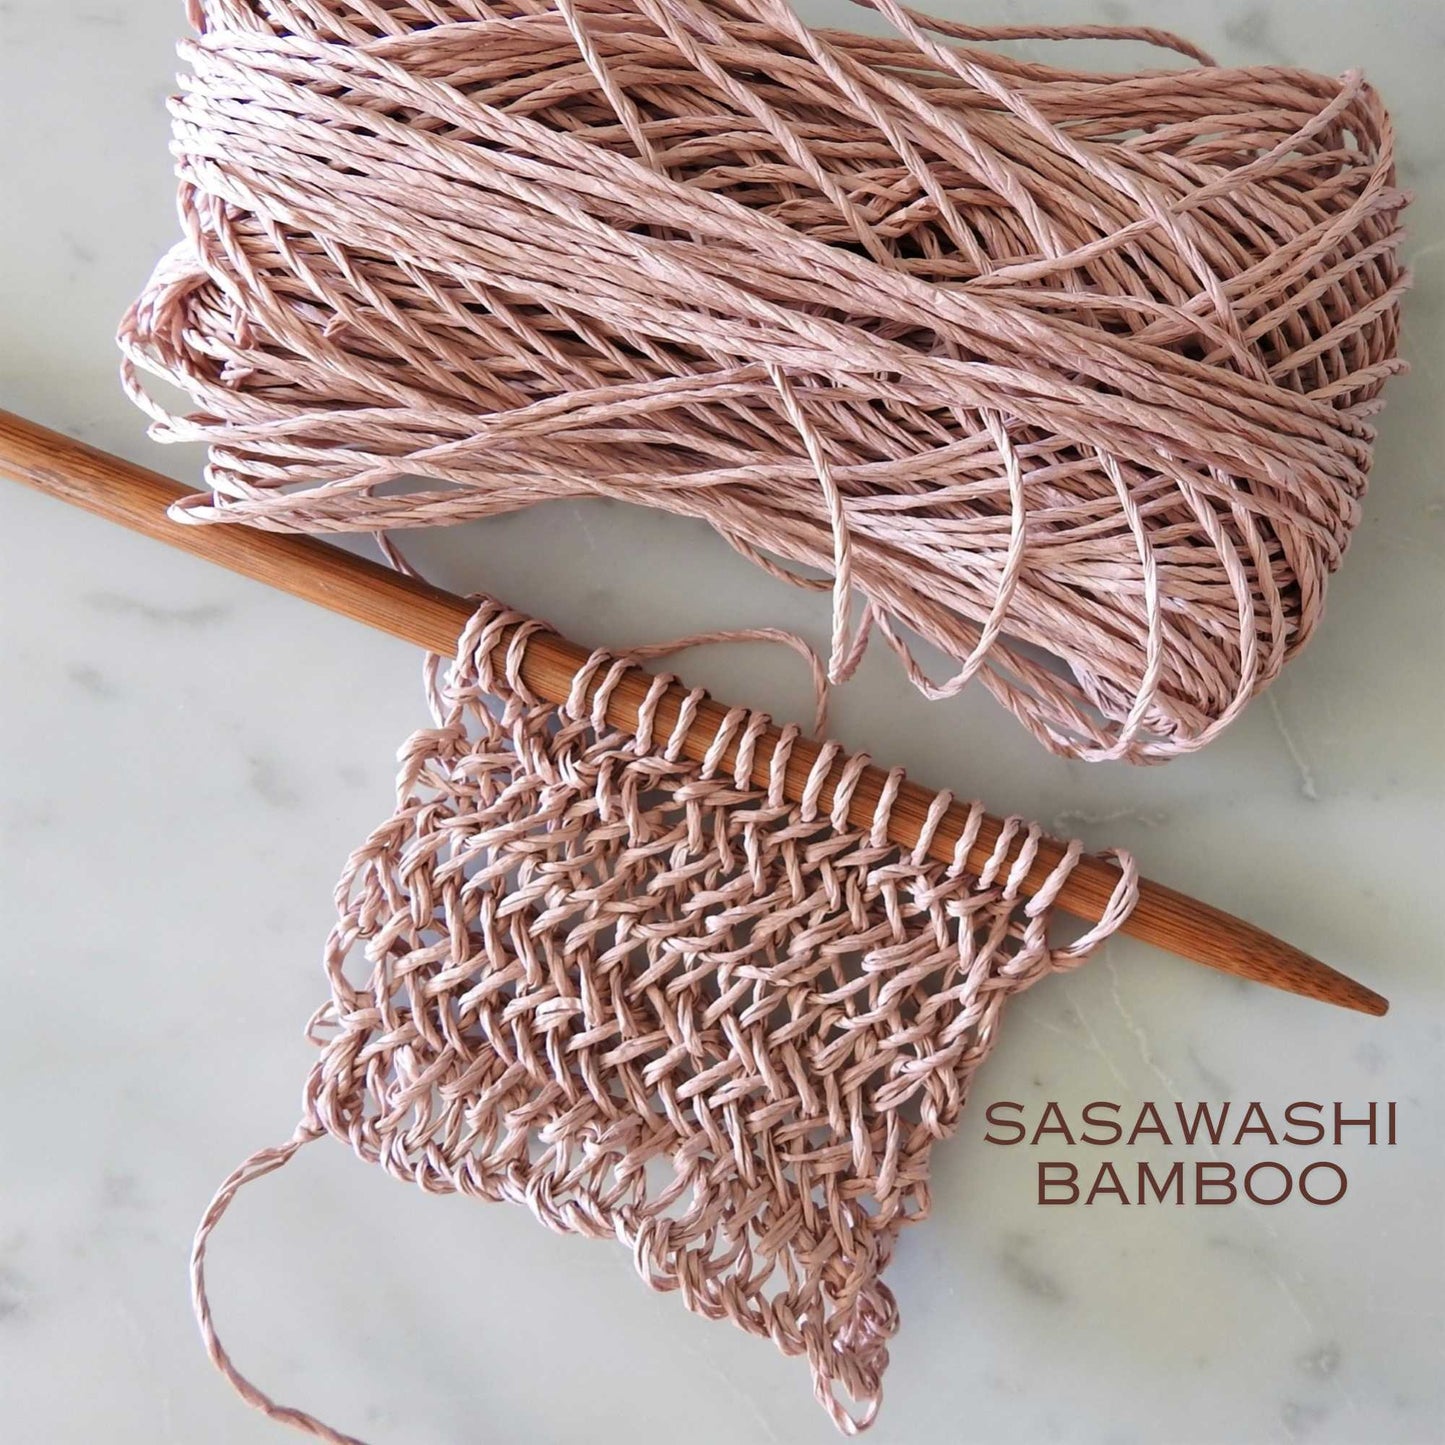 
                  
                    Knitted swatch using Sasawashi Bamboo Paper yarn in shell pink. Daruma Bamboo yarn for summer hats, bags, baskets. Eco friendly, vegan yarn for weaving, knitting, crochet, craft. Daruma Ito Yokota Sasawashi.
                  
                